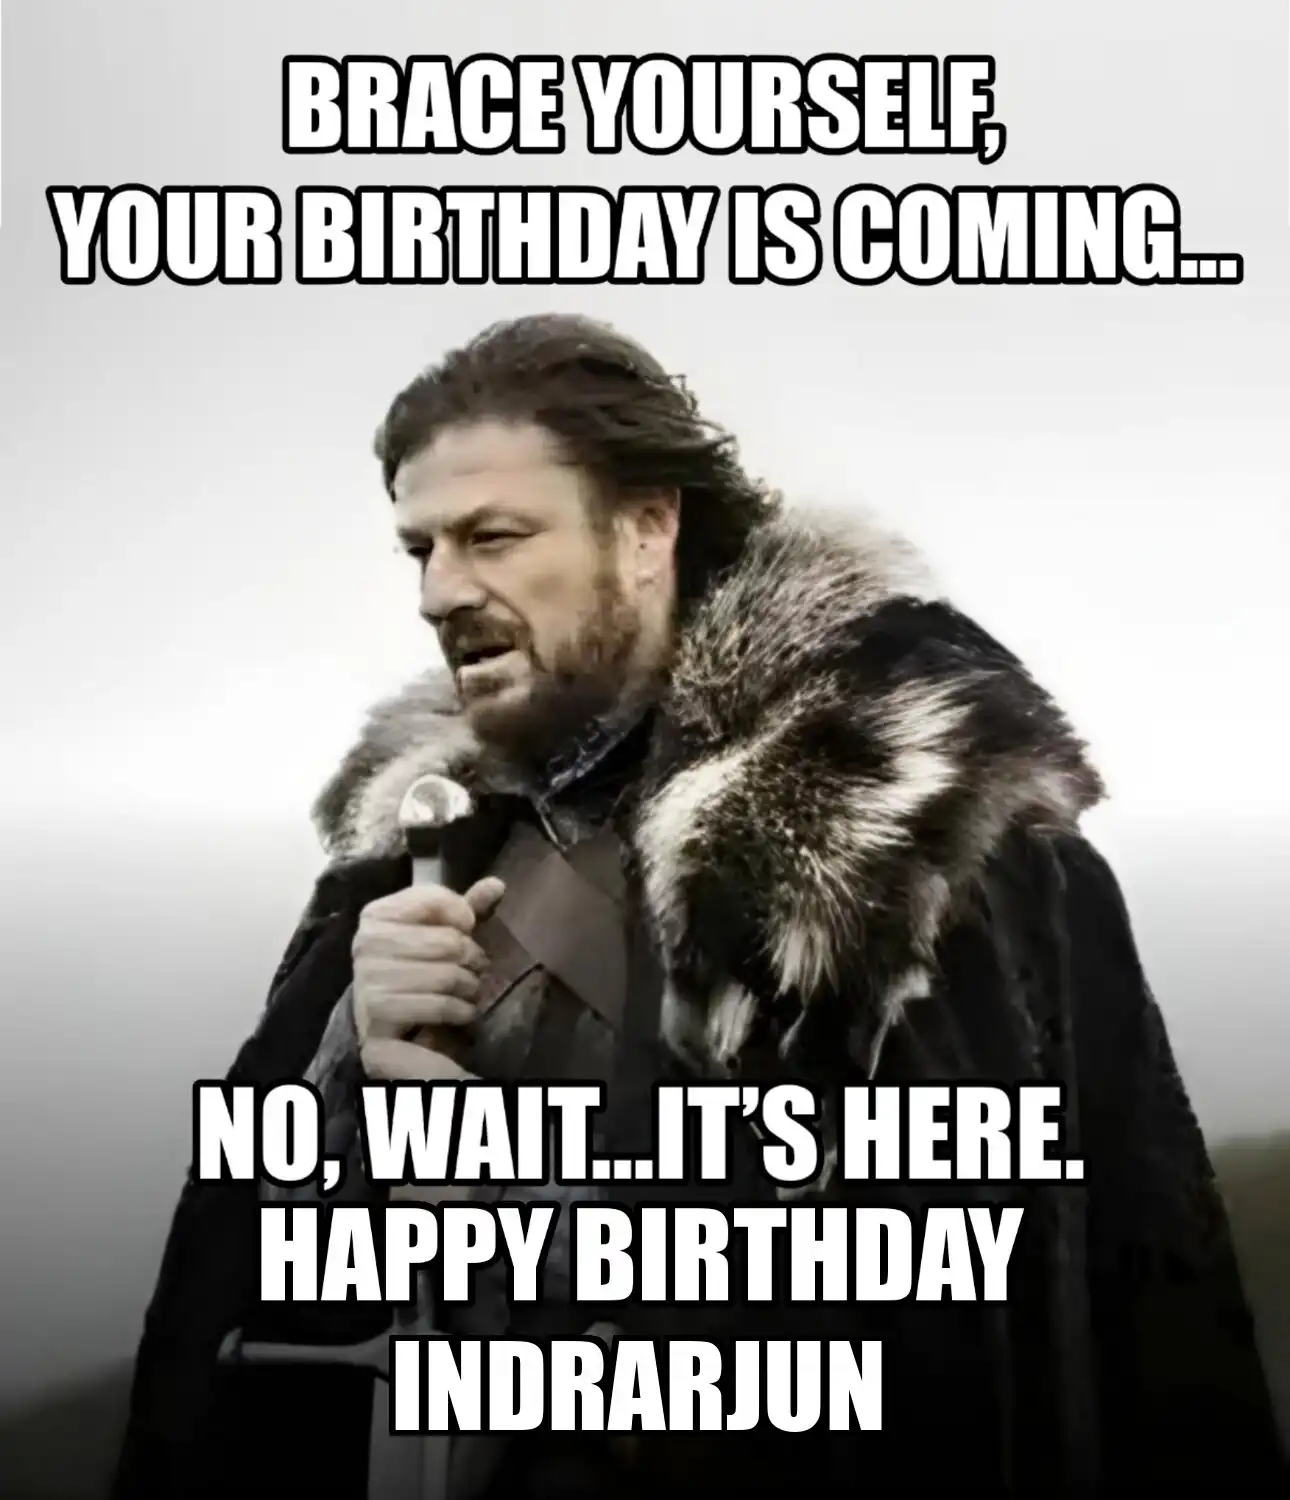 Happy Birthday Indrarjun Brace Yourself Your Birthday Is Coming Meme